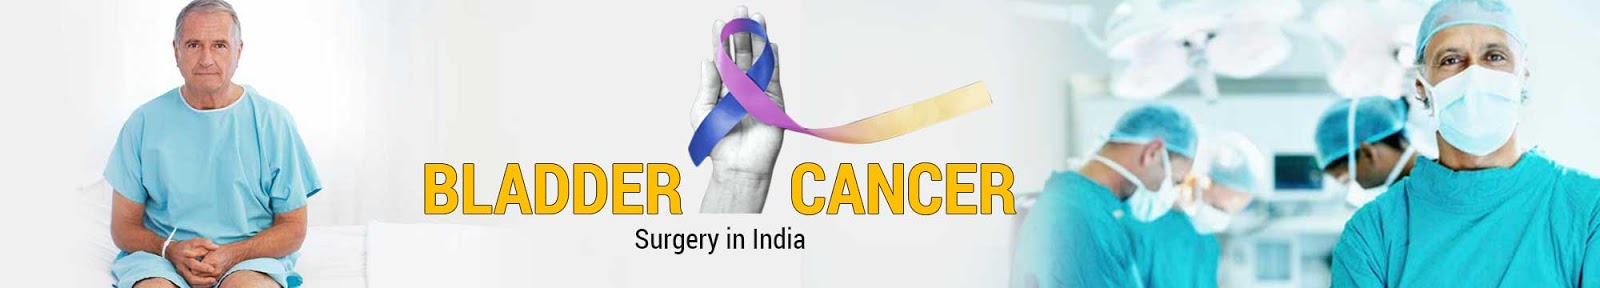 bladder cancer treatment india